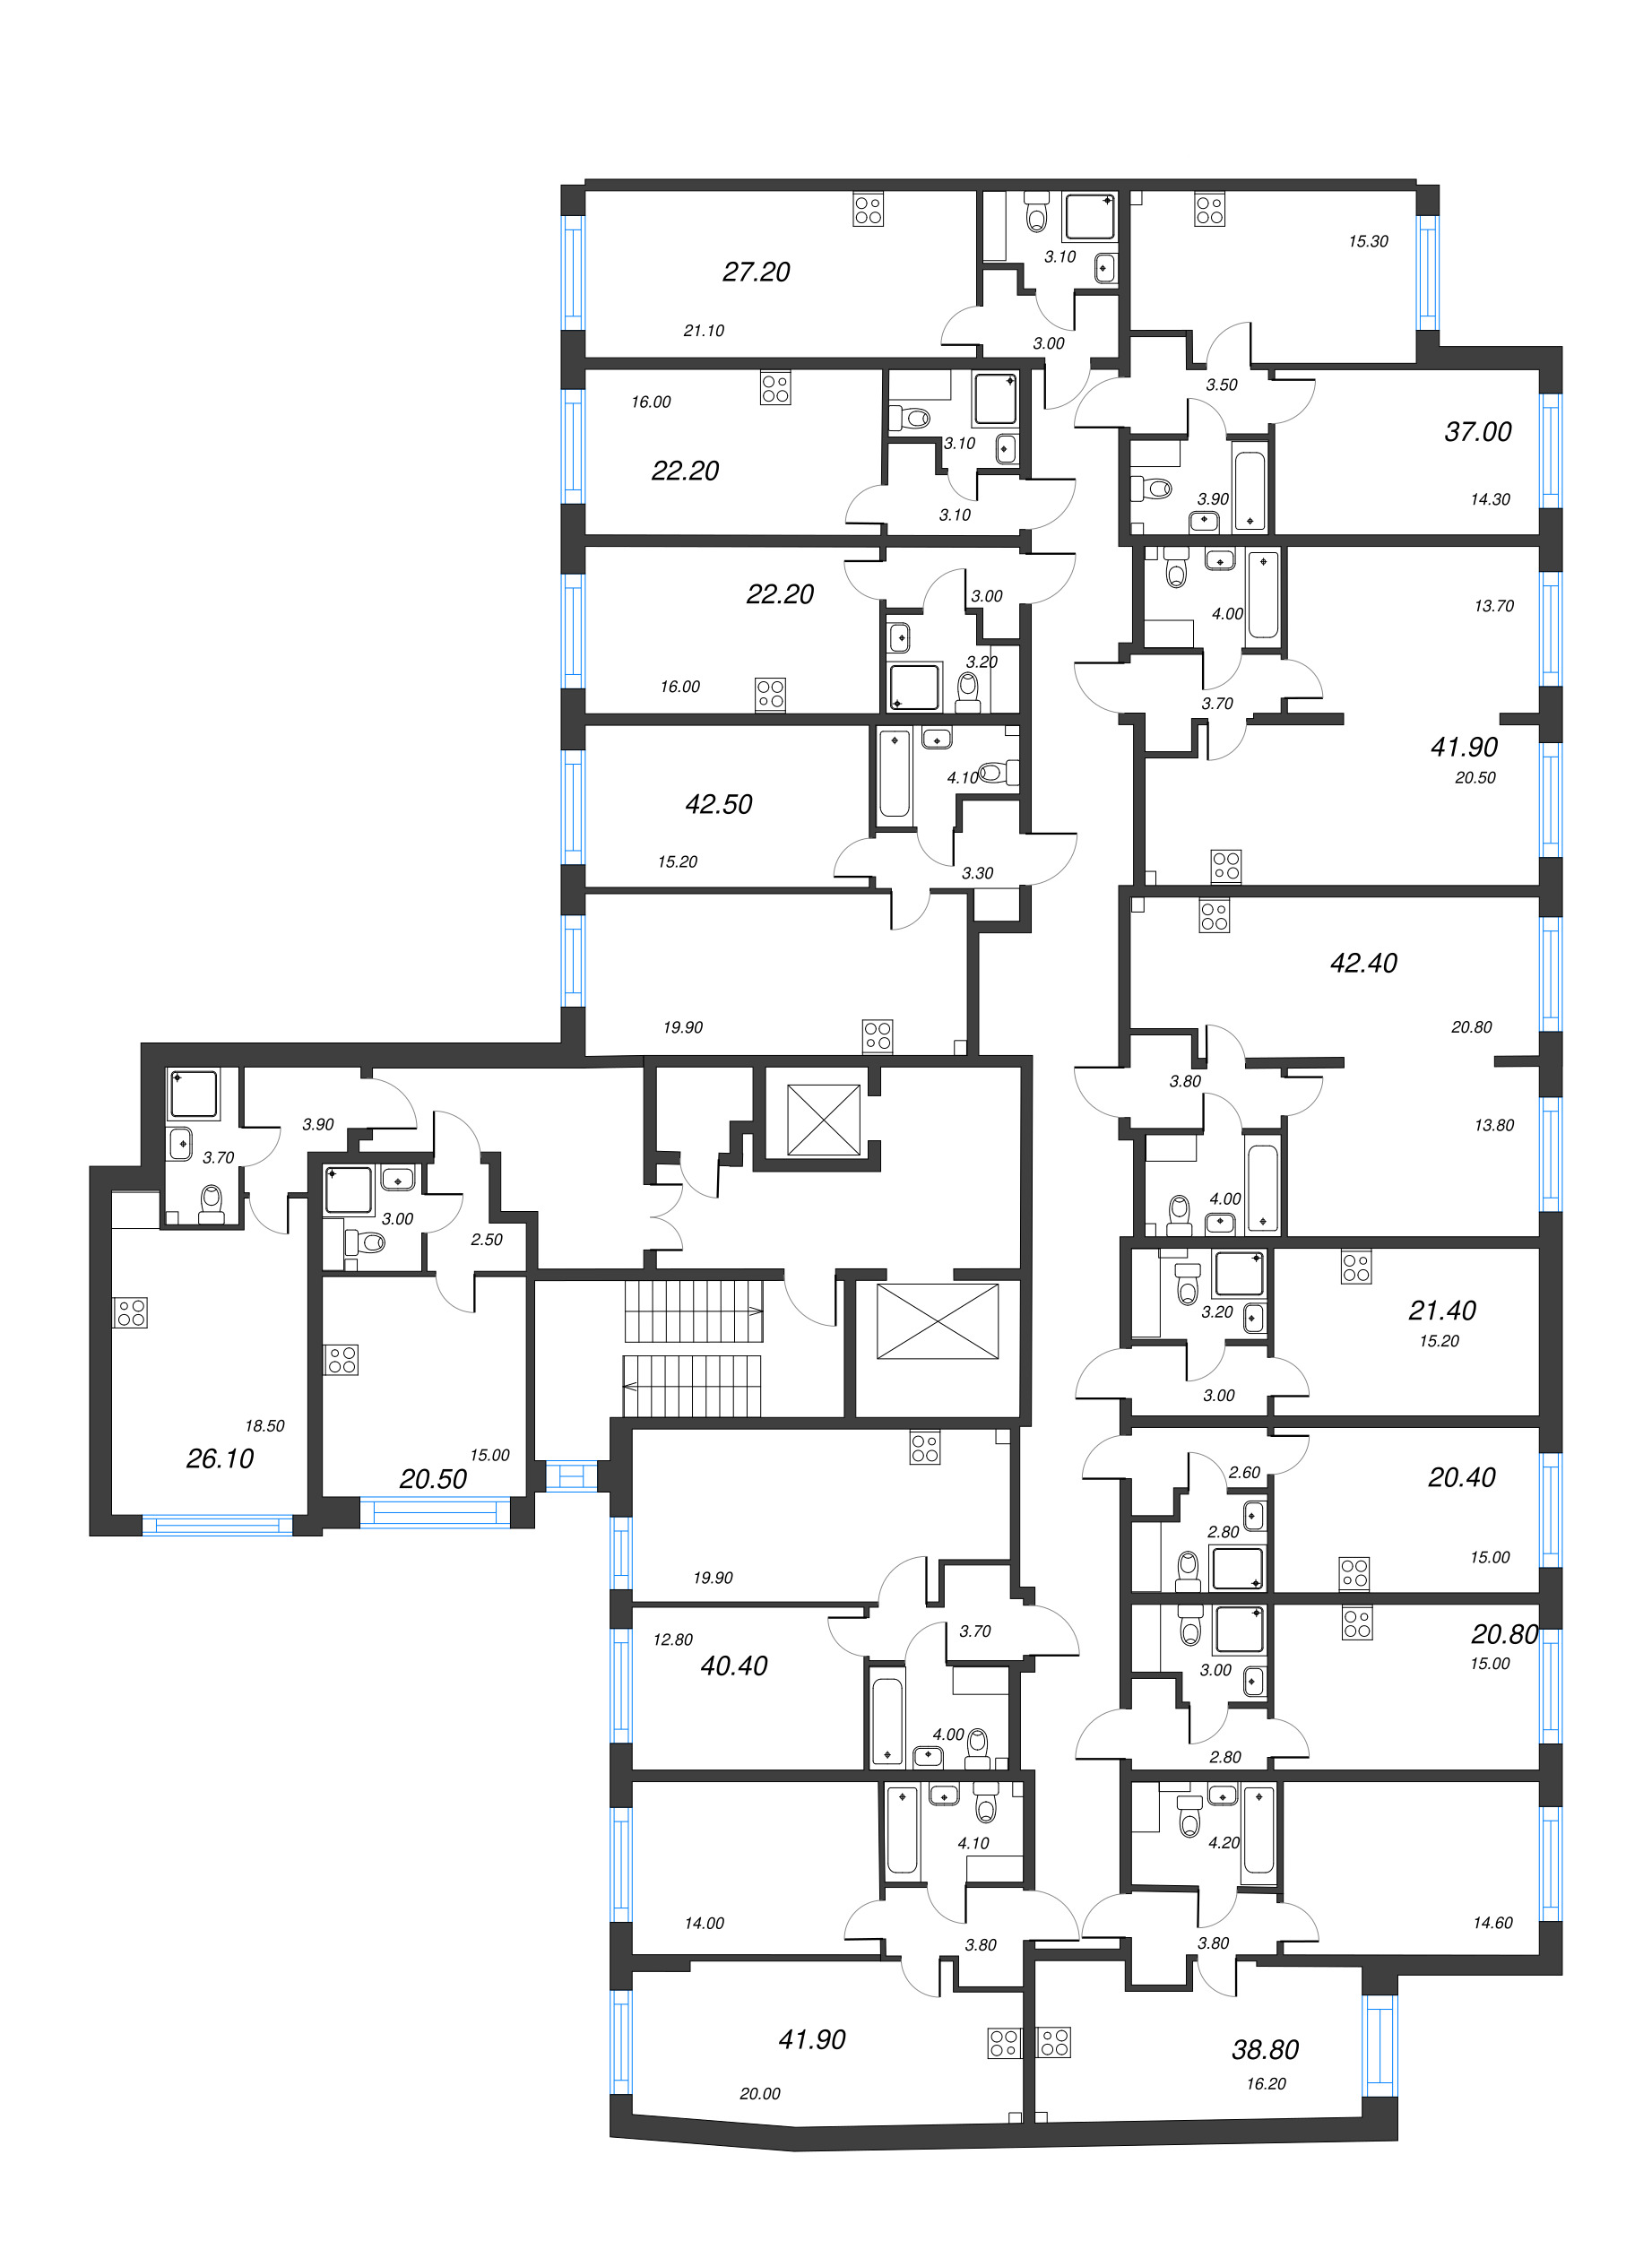 2-комнатная (Евро) квартира, 38.8 м² - планировка этажа